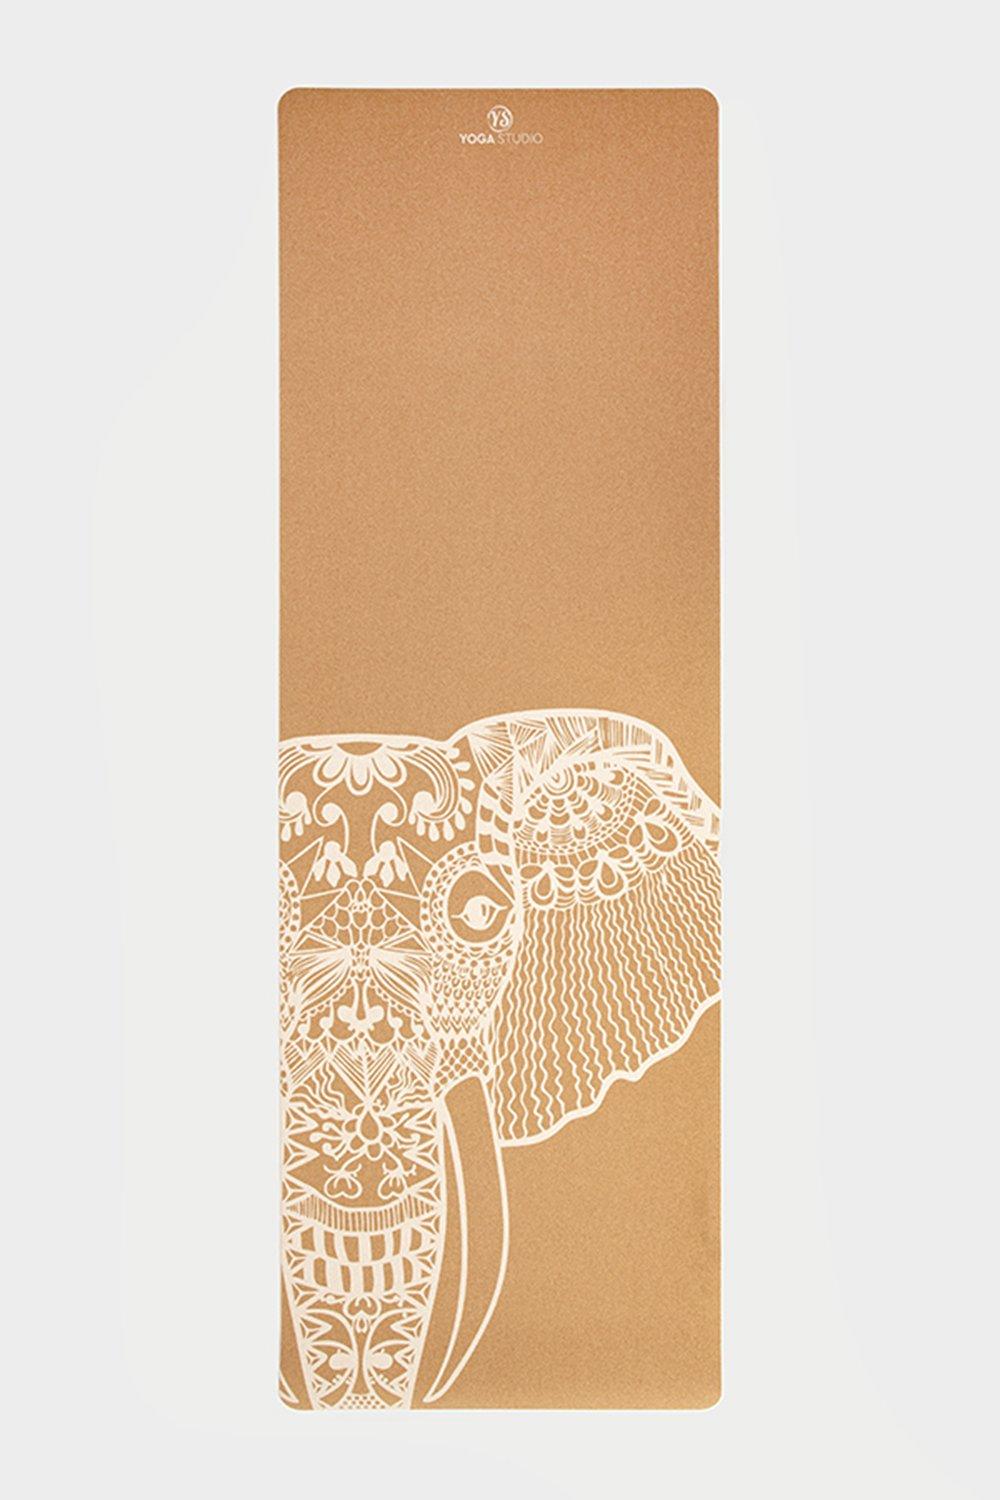 White Elephant Cork Yoga Mat 4mm